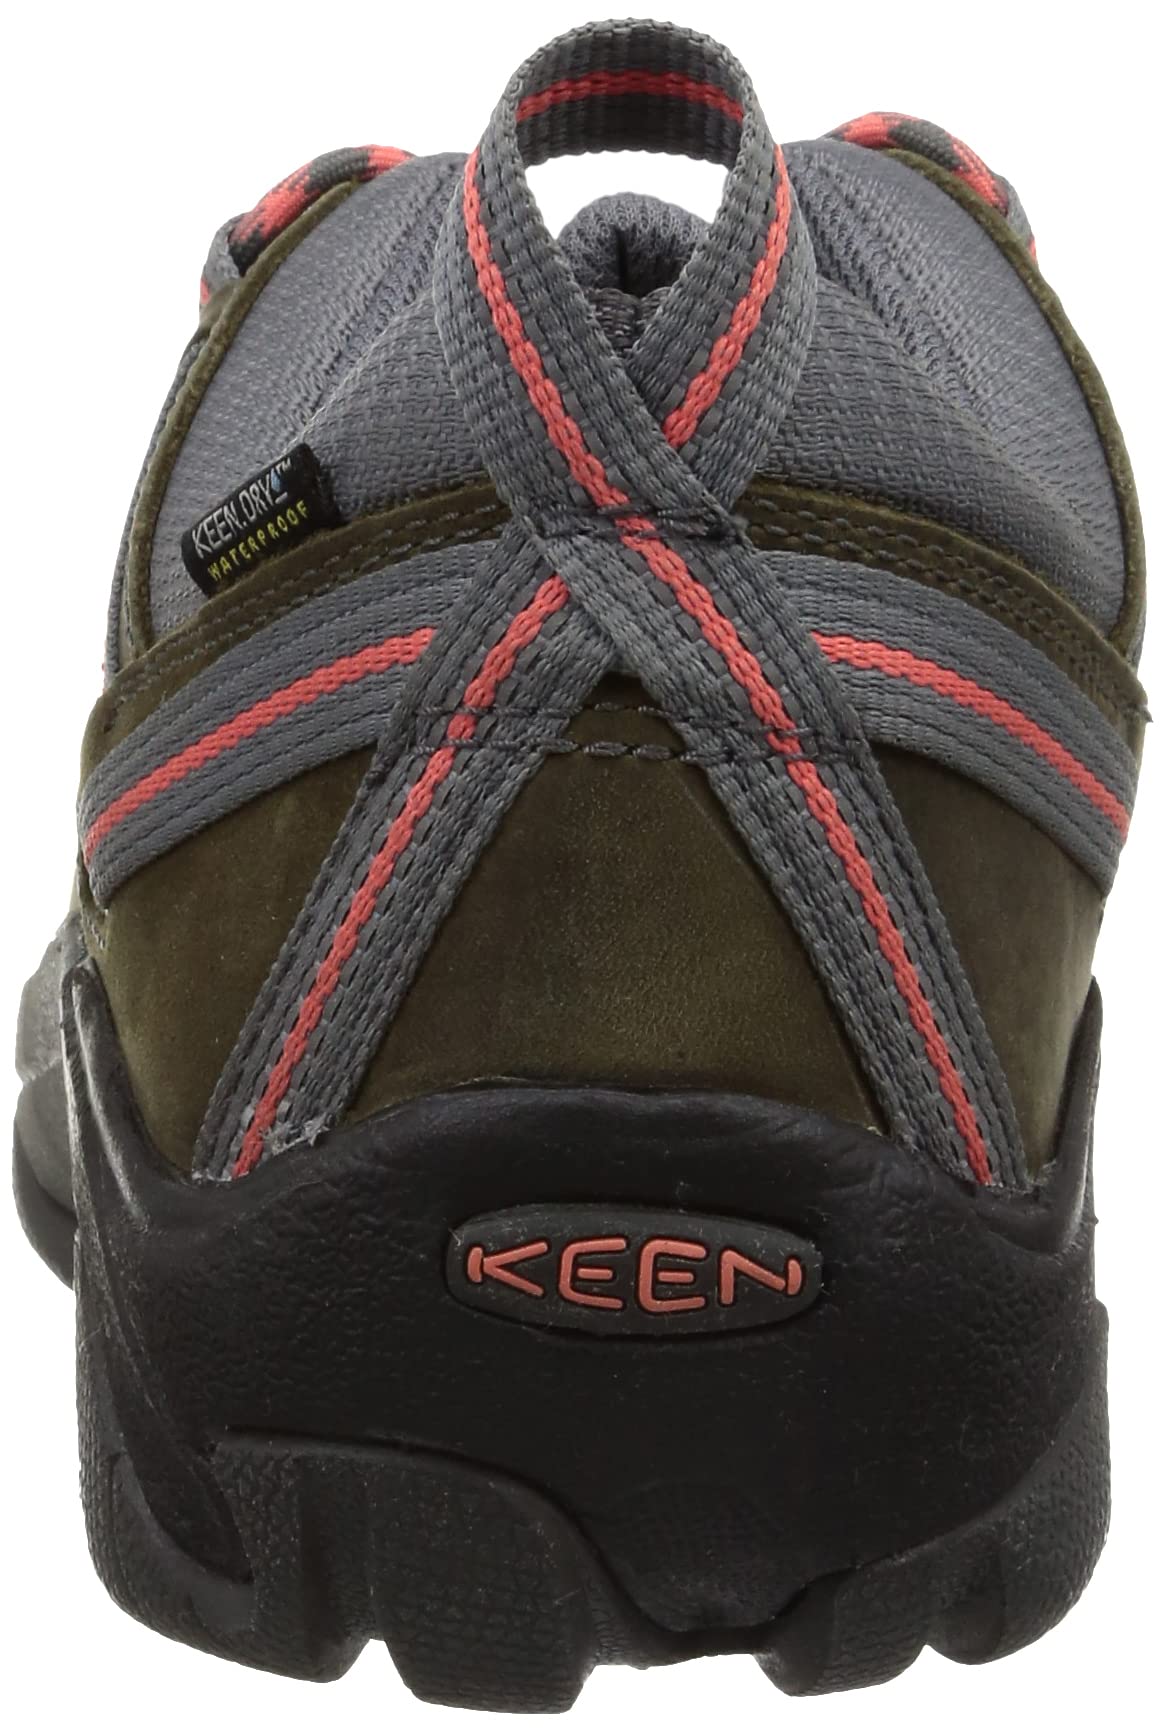 KEEN Women's Targhee 2 Low Height Waterproof Hiking Shoes, 7.5 US